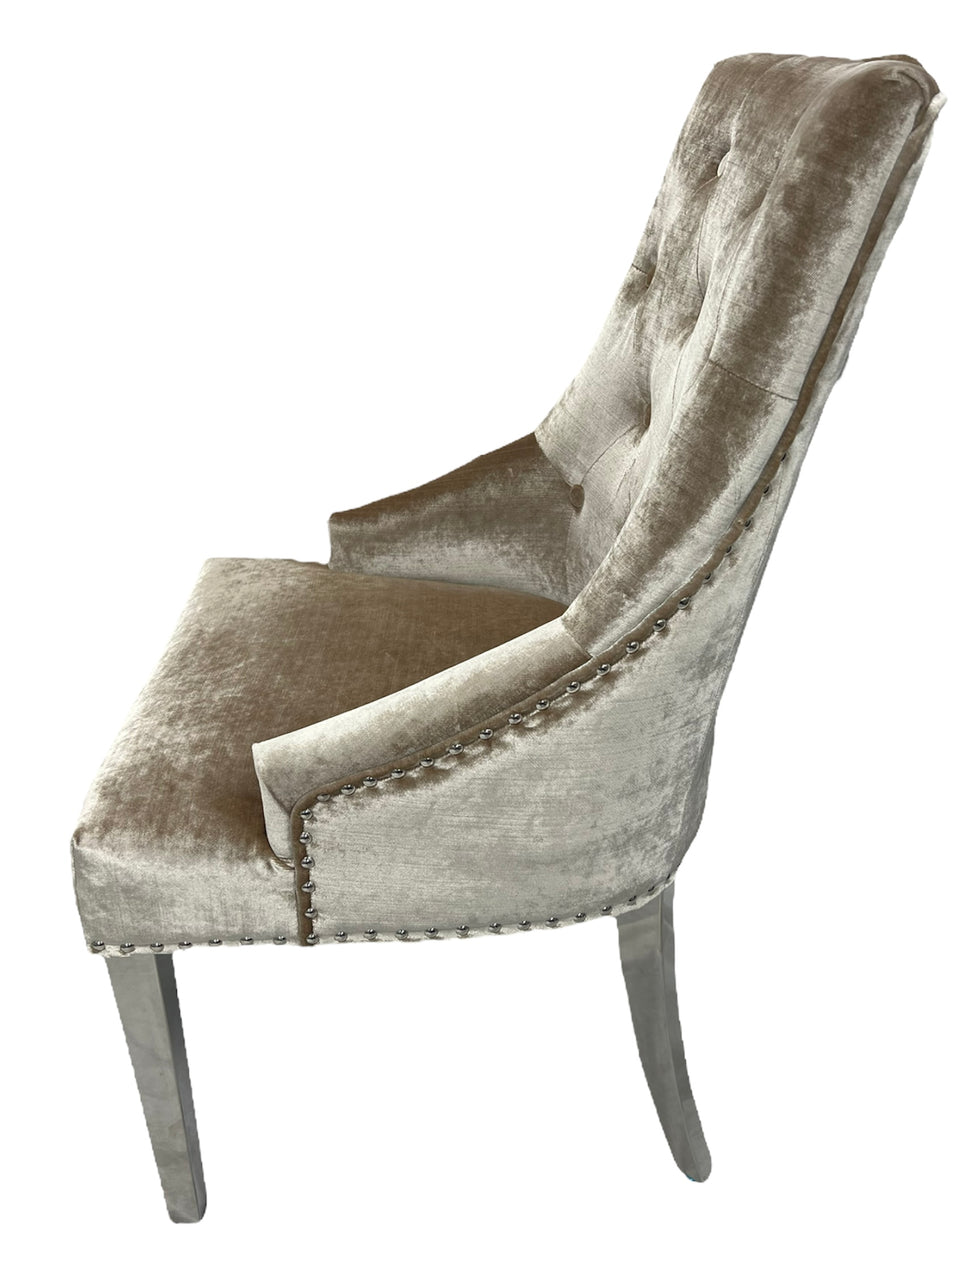 Jessica Mink Chair Ring Knocker Chrome Legs